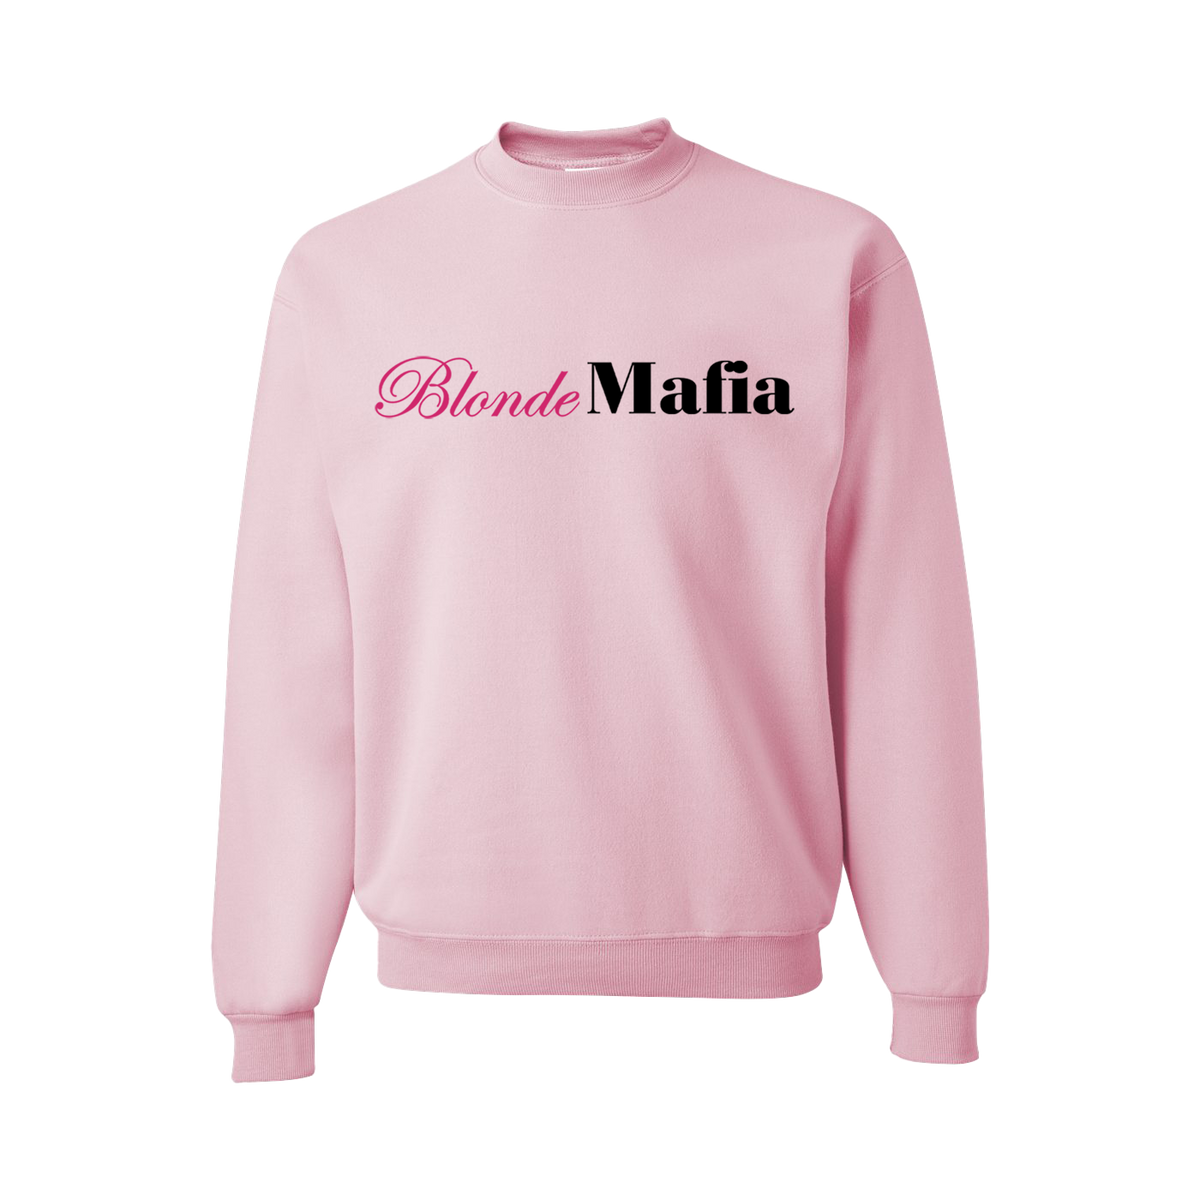 Blonde Mafia Pink Crewneck